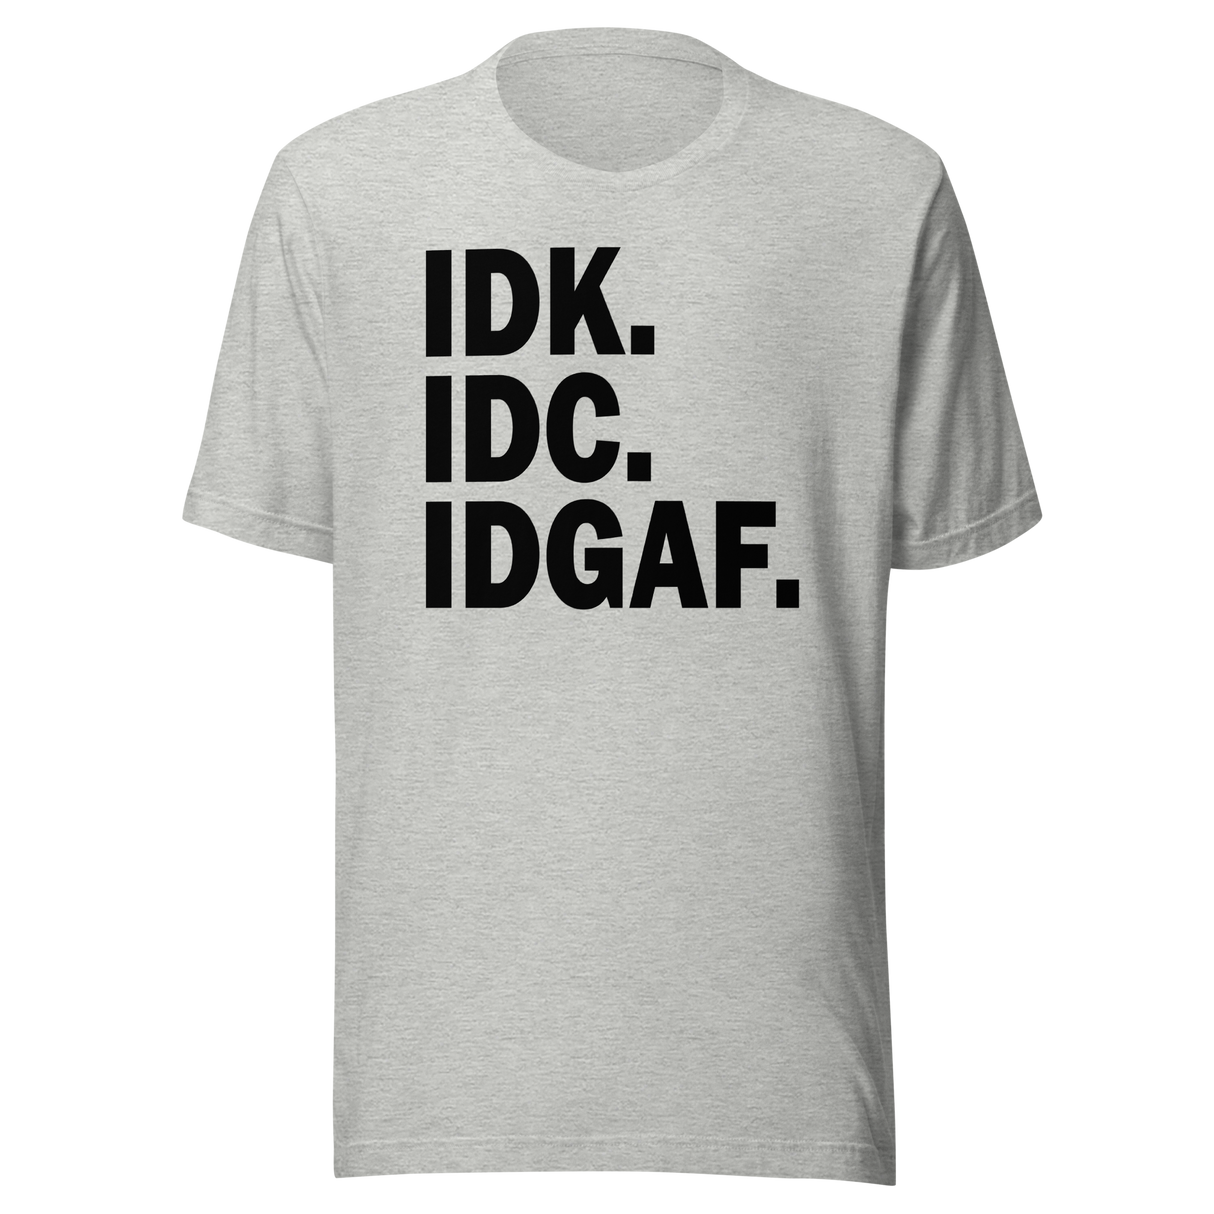 IDK IDC IDGAF - Life Tee - Love T-Shirt - Happiness Tee - Strength T-Shirt - Freedom Tee